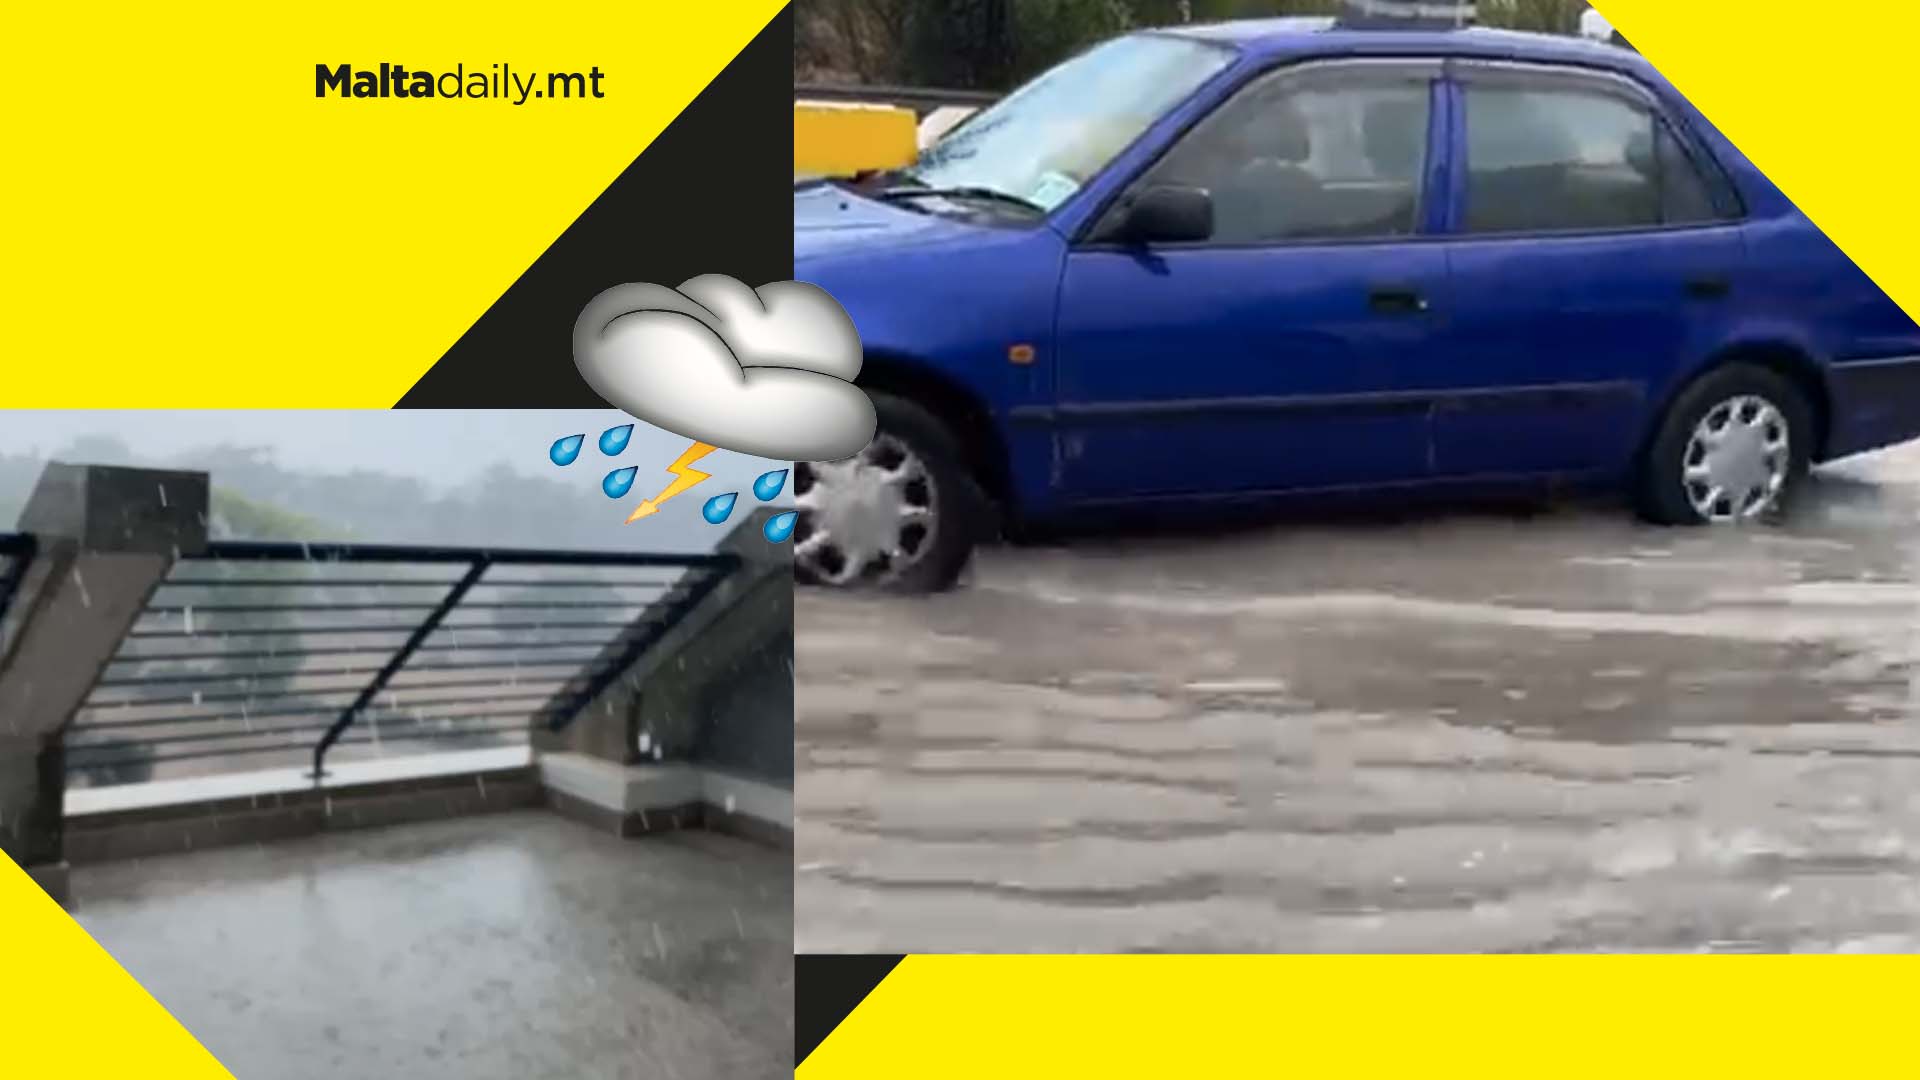 Flooding in Mriehel due to heavy rain fall all over Malta